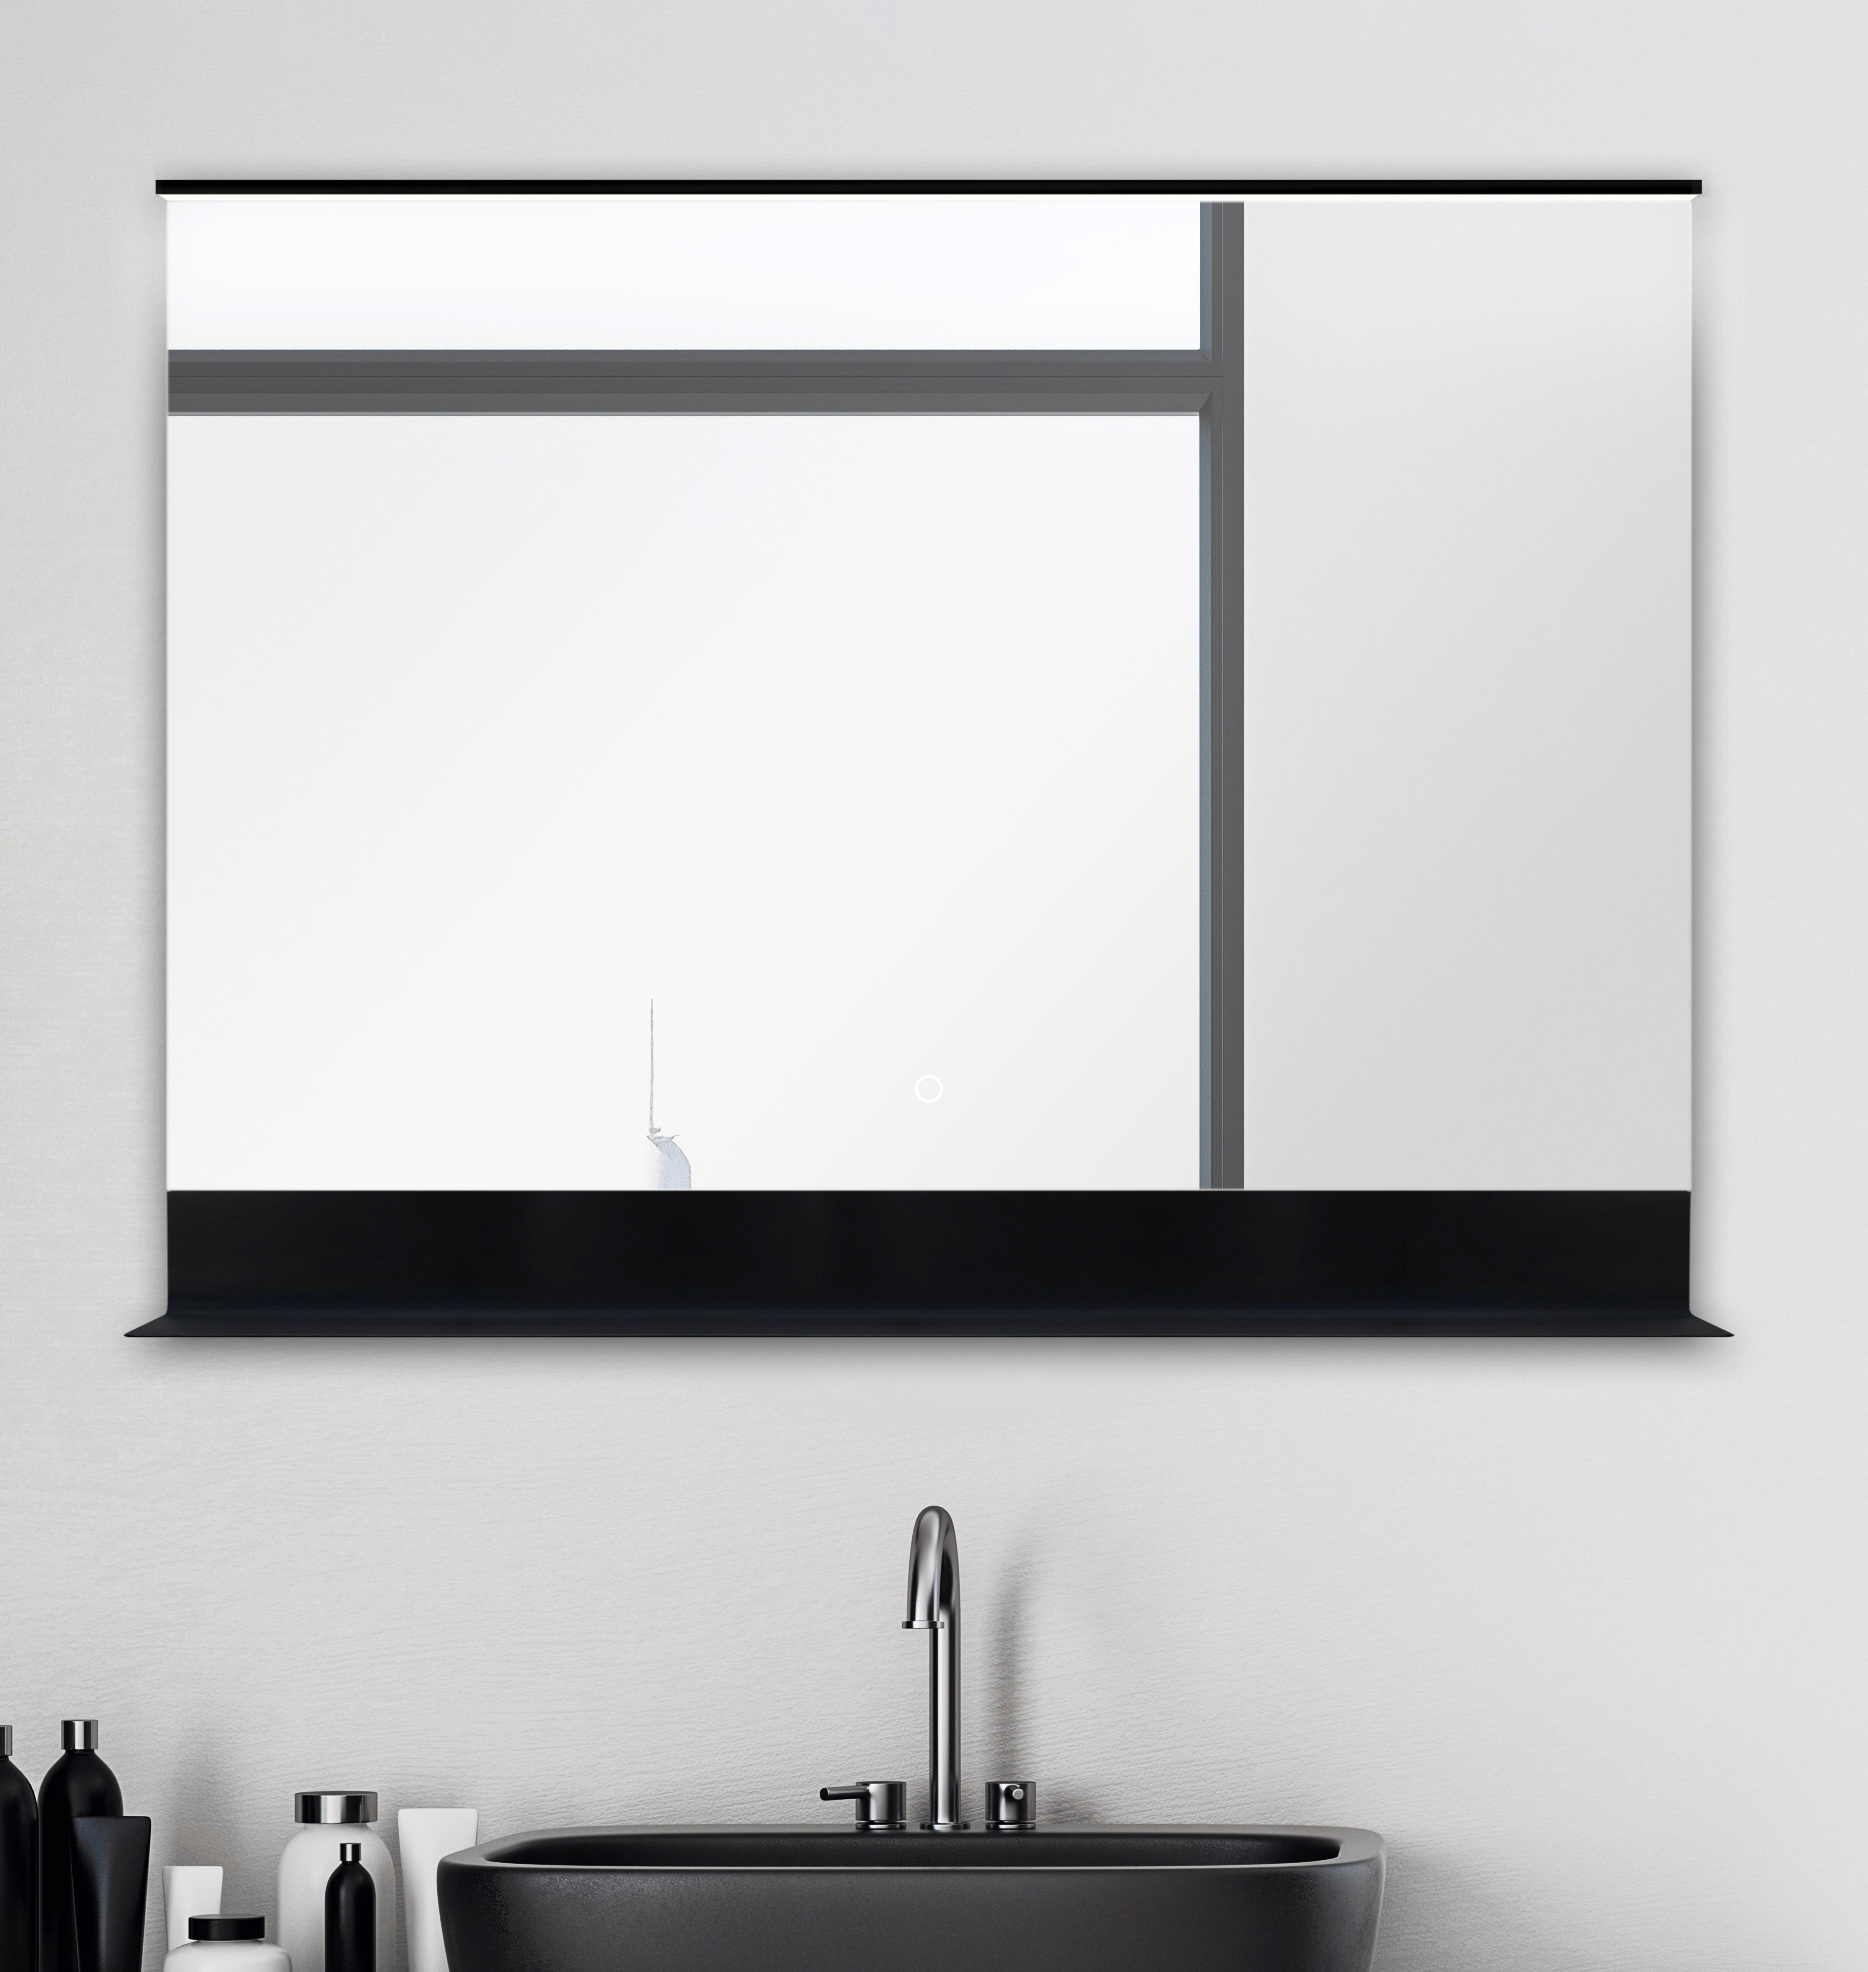 Talos Badspiegel »BLACK HOME«, (Komplett-Set), BxH: 80x60 cm, energiesparend